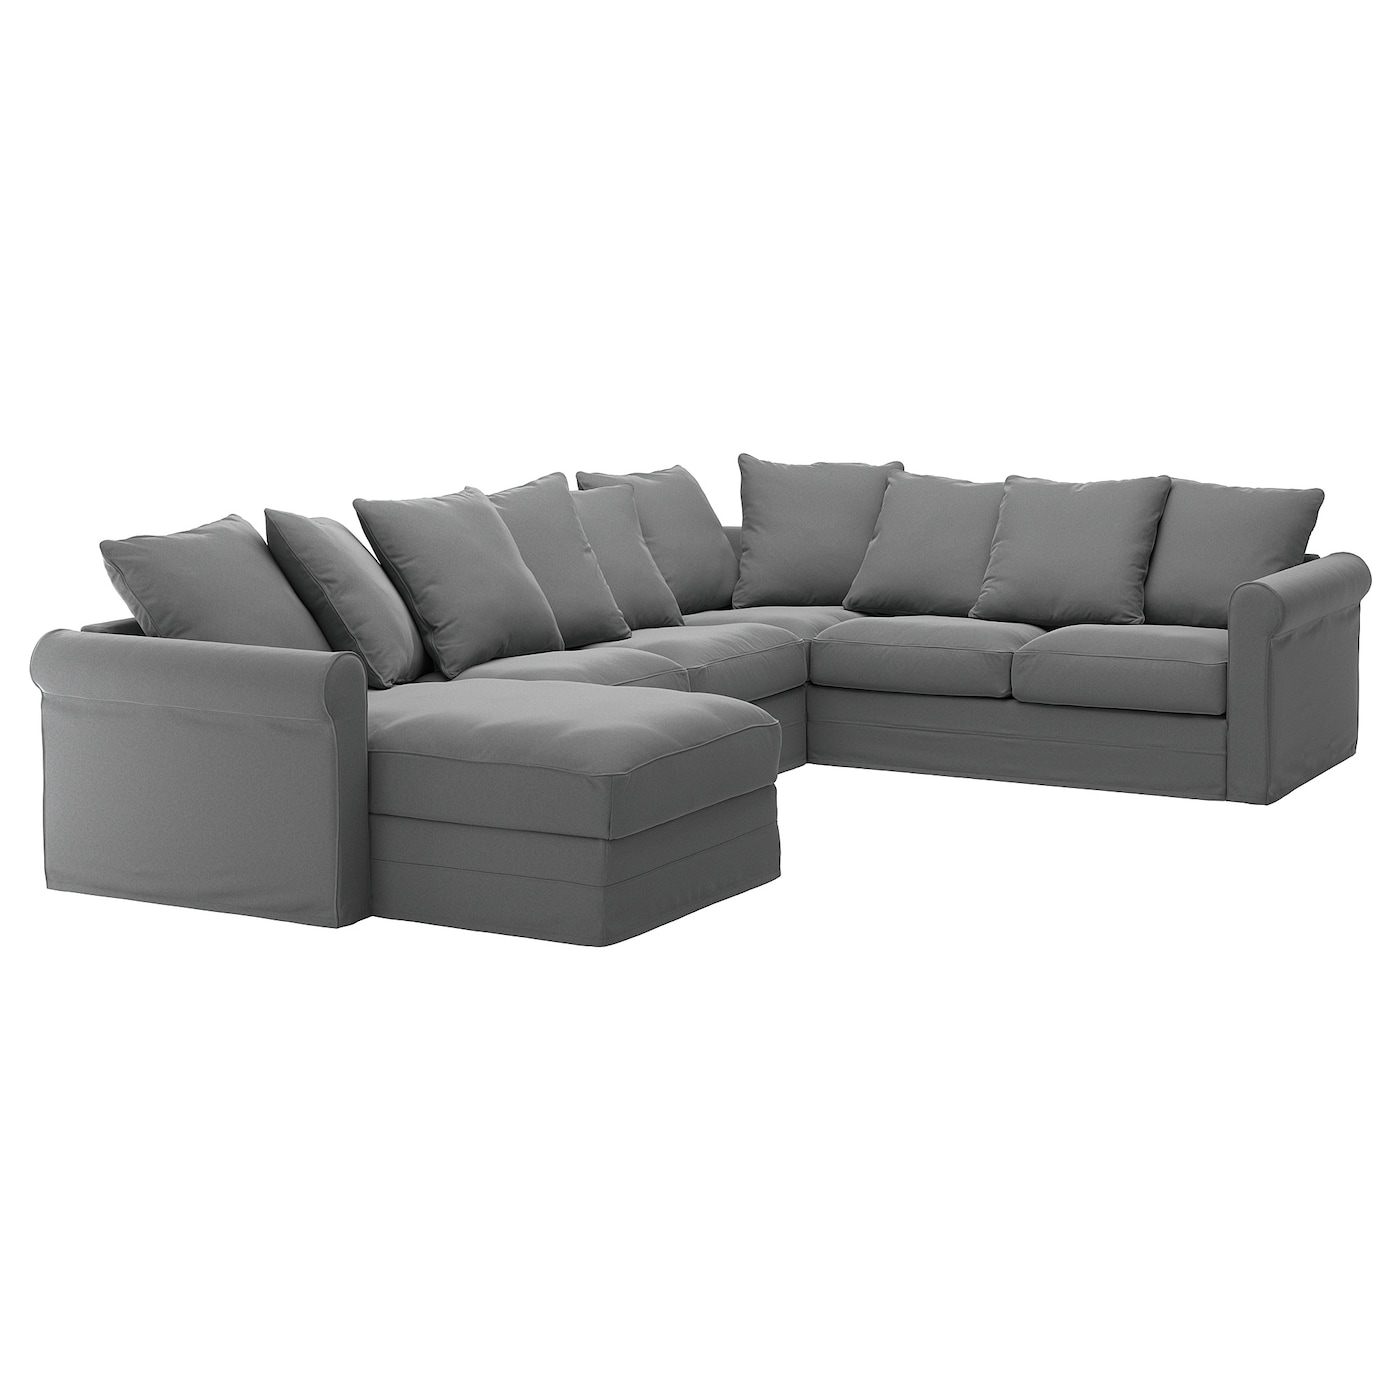 угловой диван флит ГРЁНЛИД Диван угловой, 5-местный. диван+диван, Люнген средний серый GRÖNLID IKEA